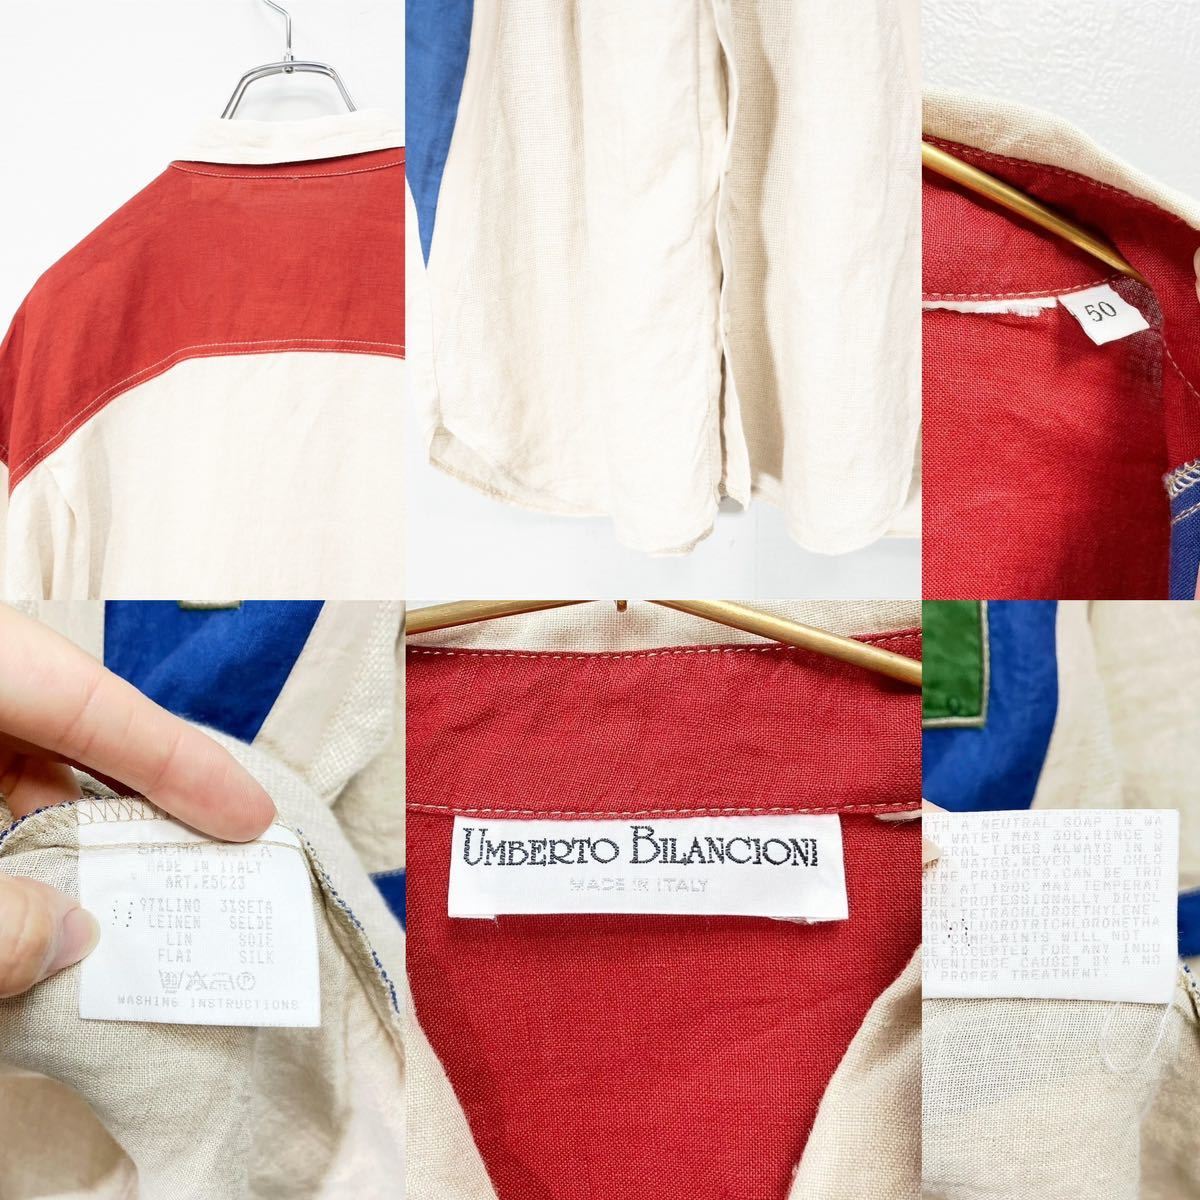 EU VINTAGE UMBERTO BILANCIONI HALF SLEEVE LINEN EMBROIDERY DESIGN SHIRT MADE IN ITALY/ヨーロッパ古着半袖リネン刺繍デザインシャツ